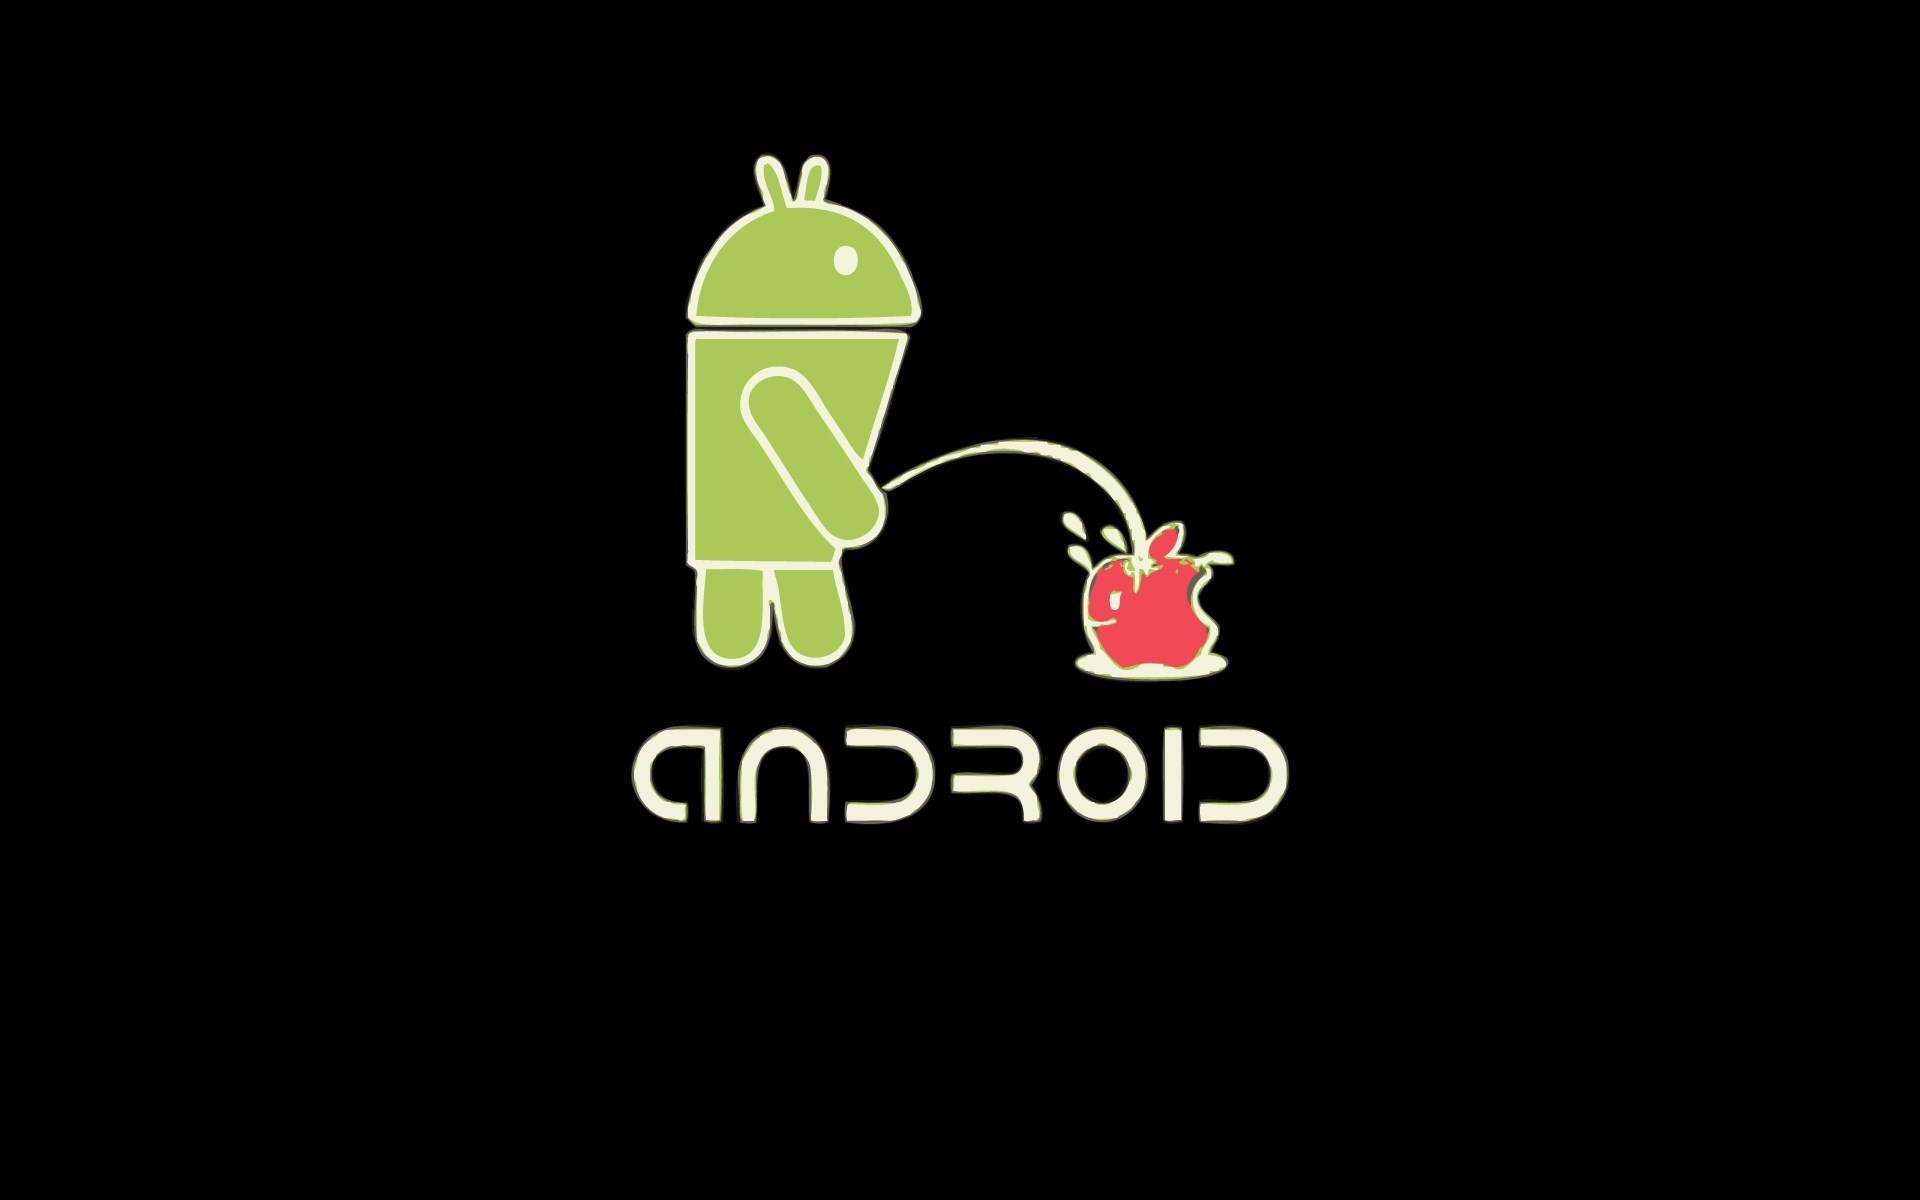 Логотип андроид. Андроид против айфона. Заставки на Android. Андроид прикольные. Андроид при включении реклама на телефоне